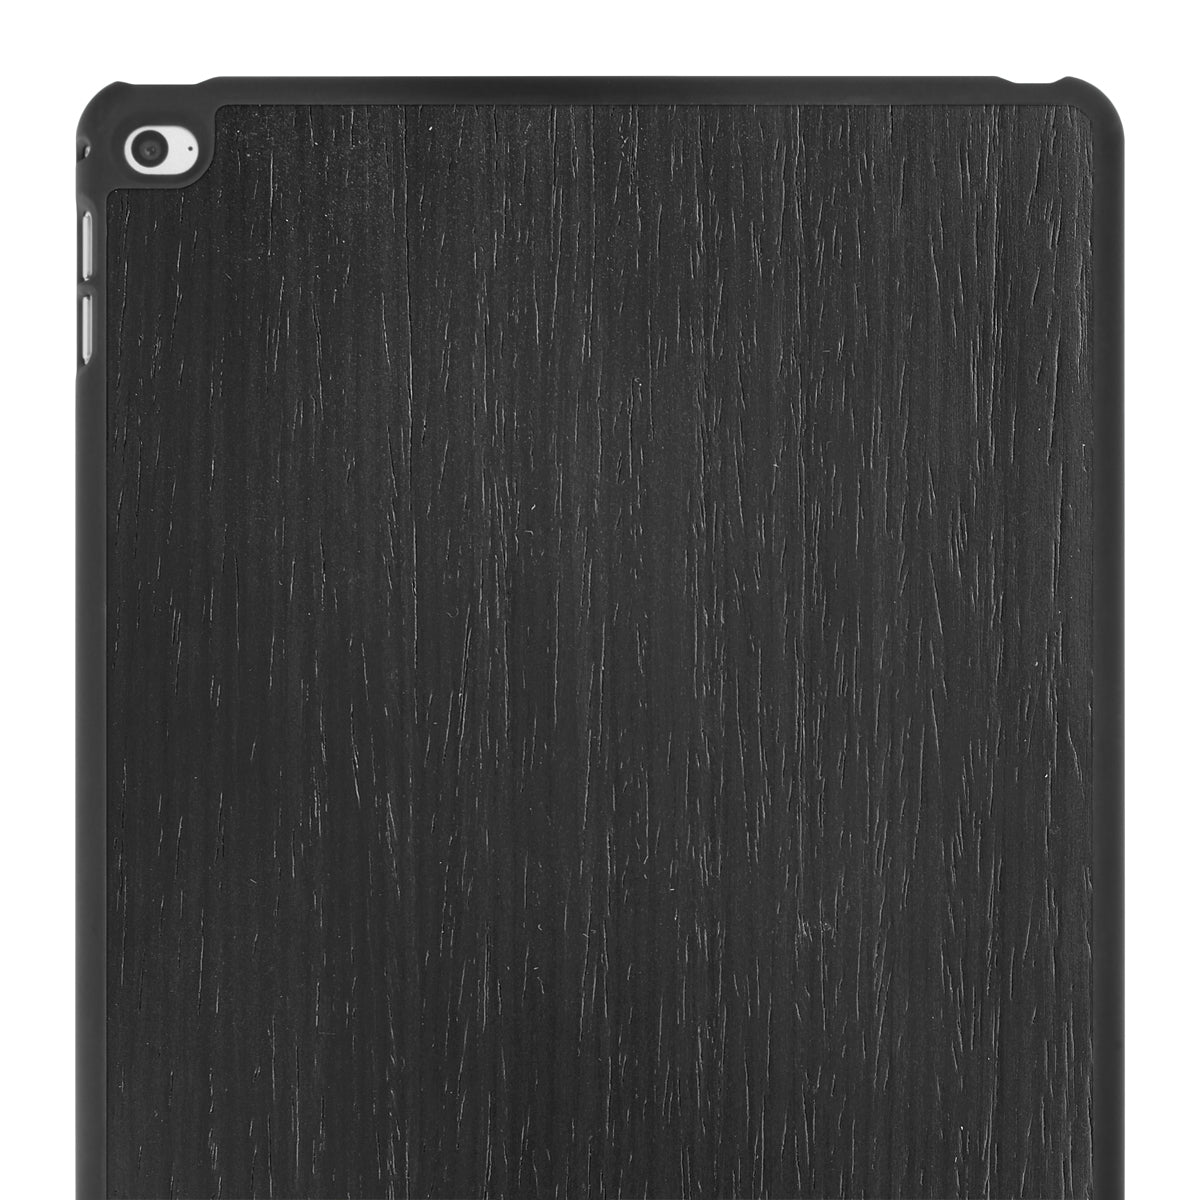 iPad Air 2 — #WoodBack Snap Case